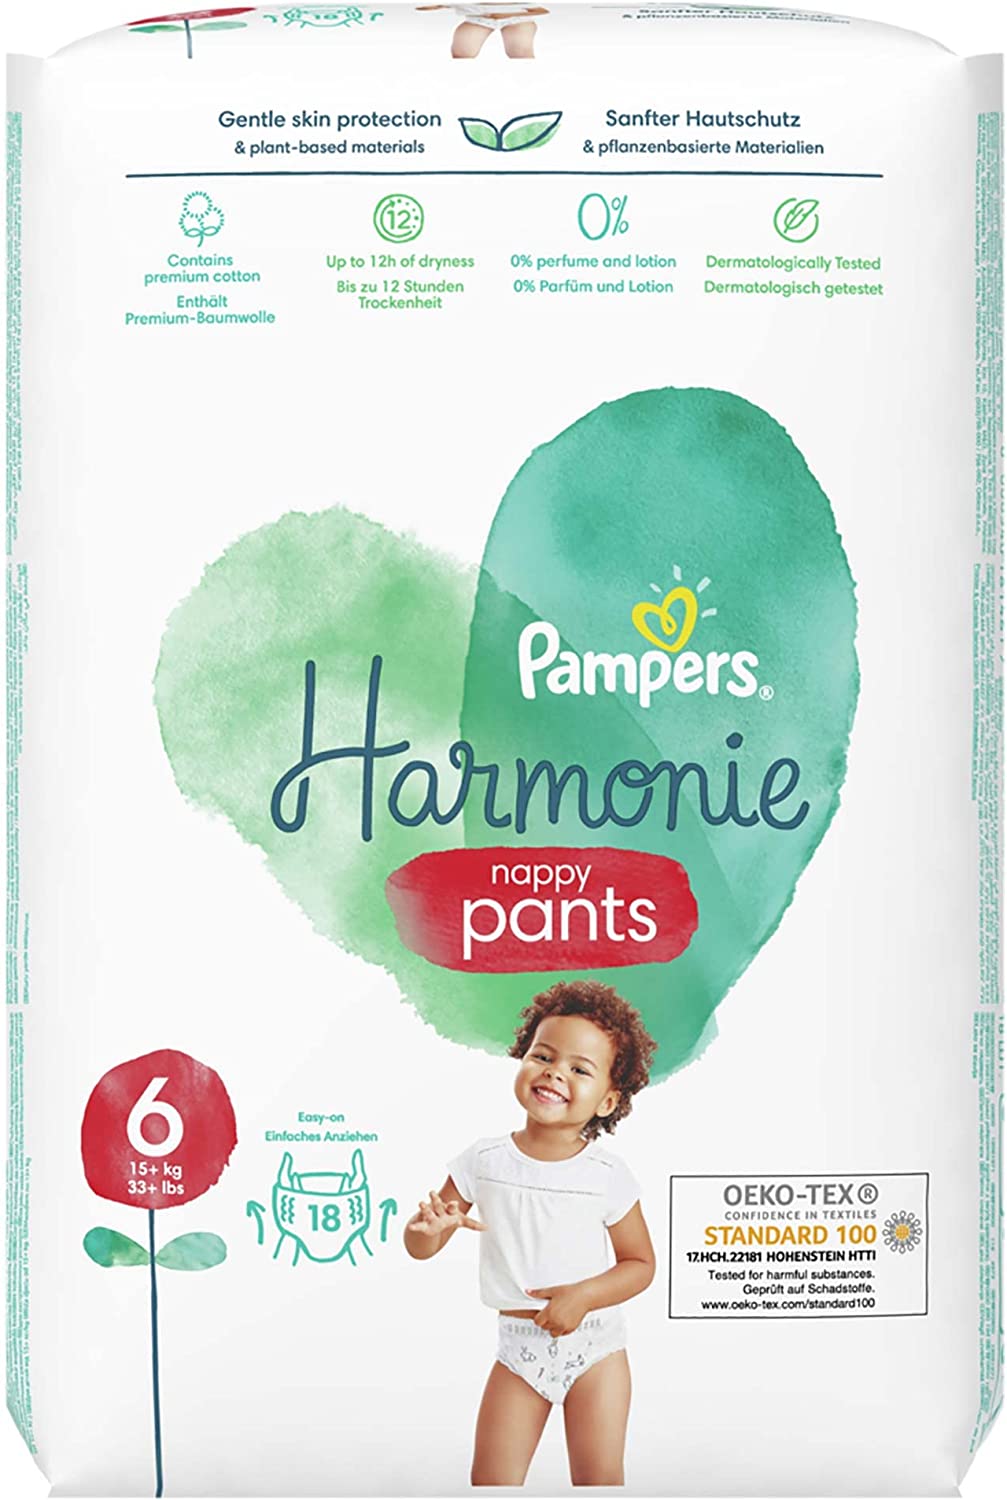 Pampers Harmonie (Pure) Nappy Pants, Size 6, 15+ kg, 18 pieces